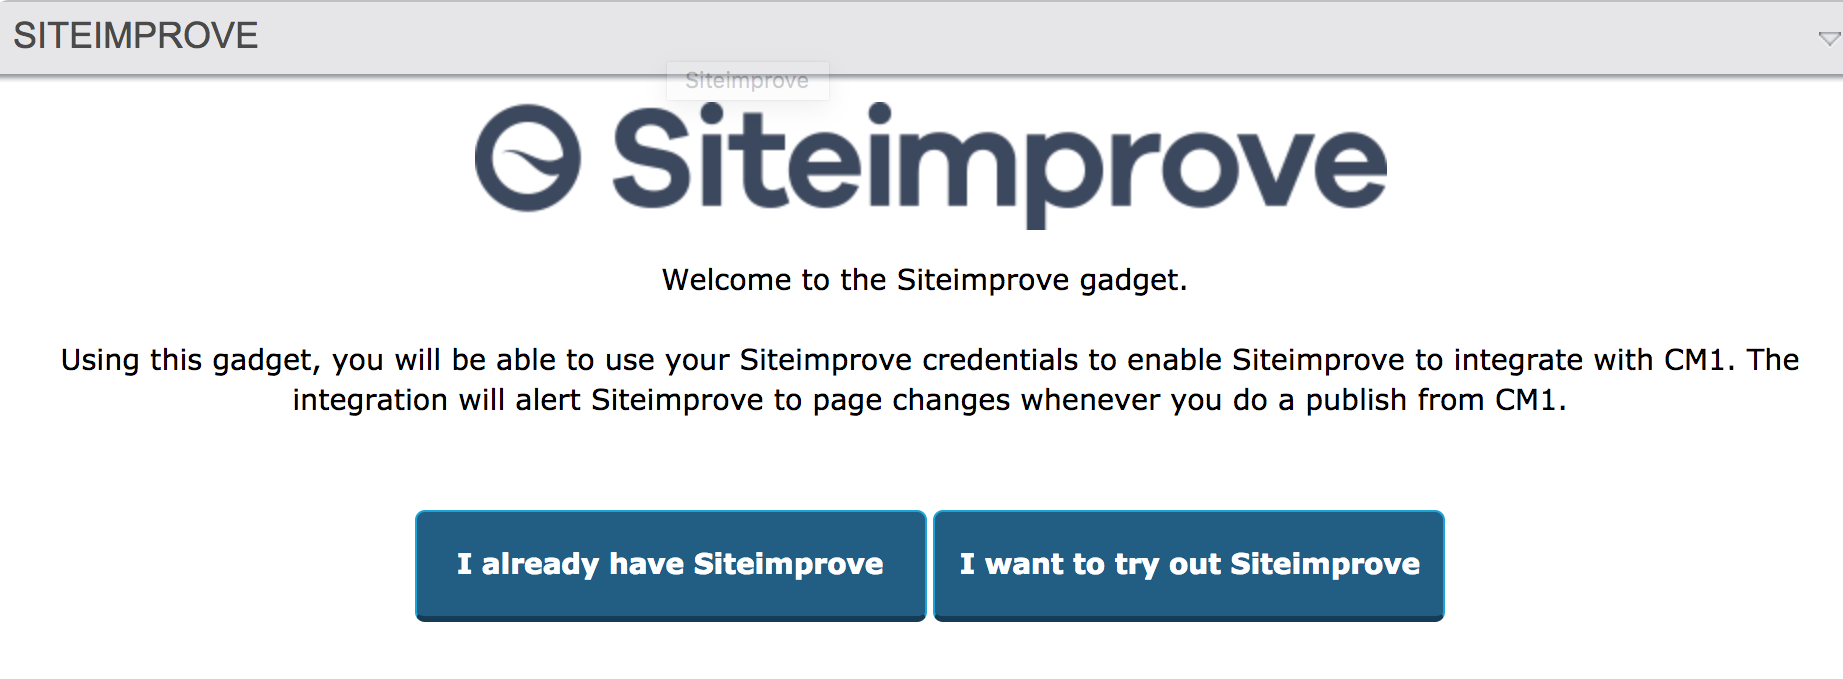 Screenshot of the Siteimprove Gadget